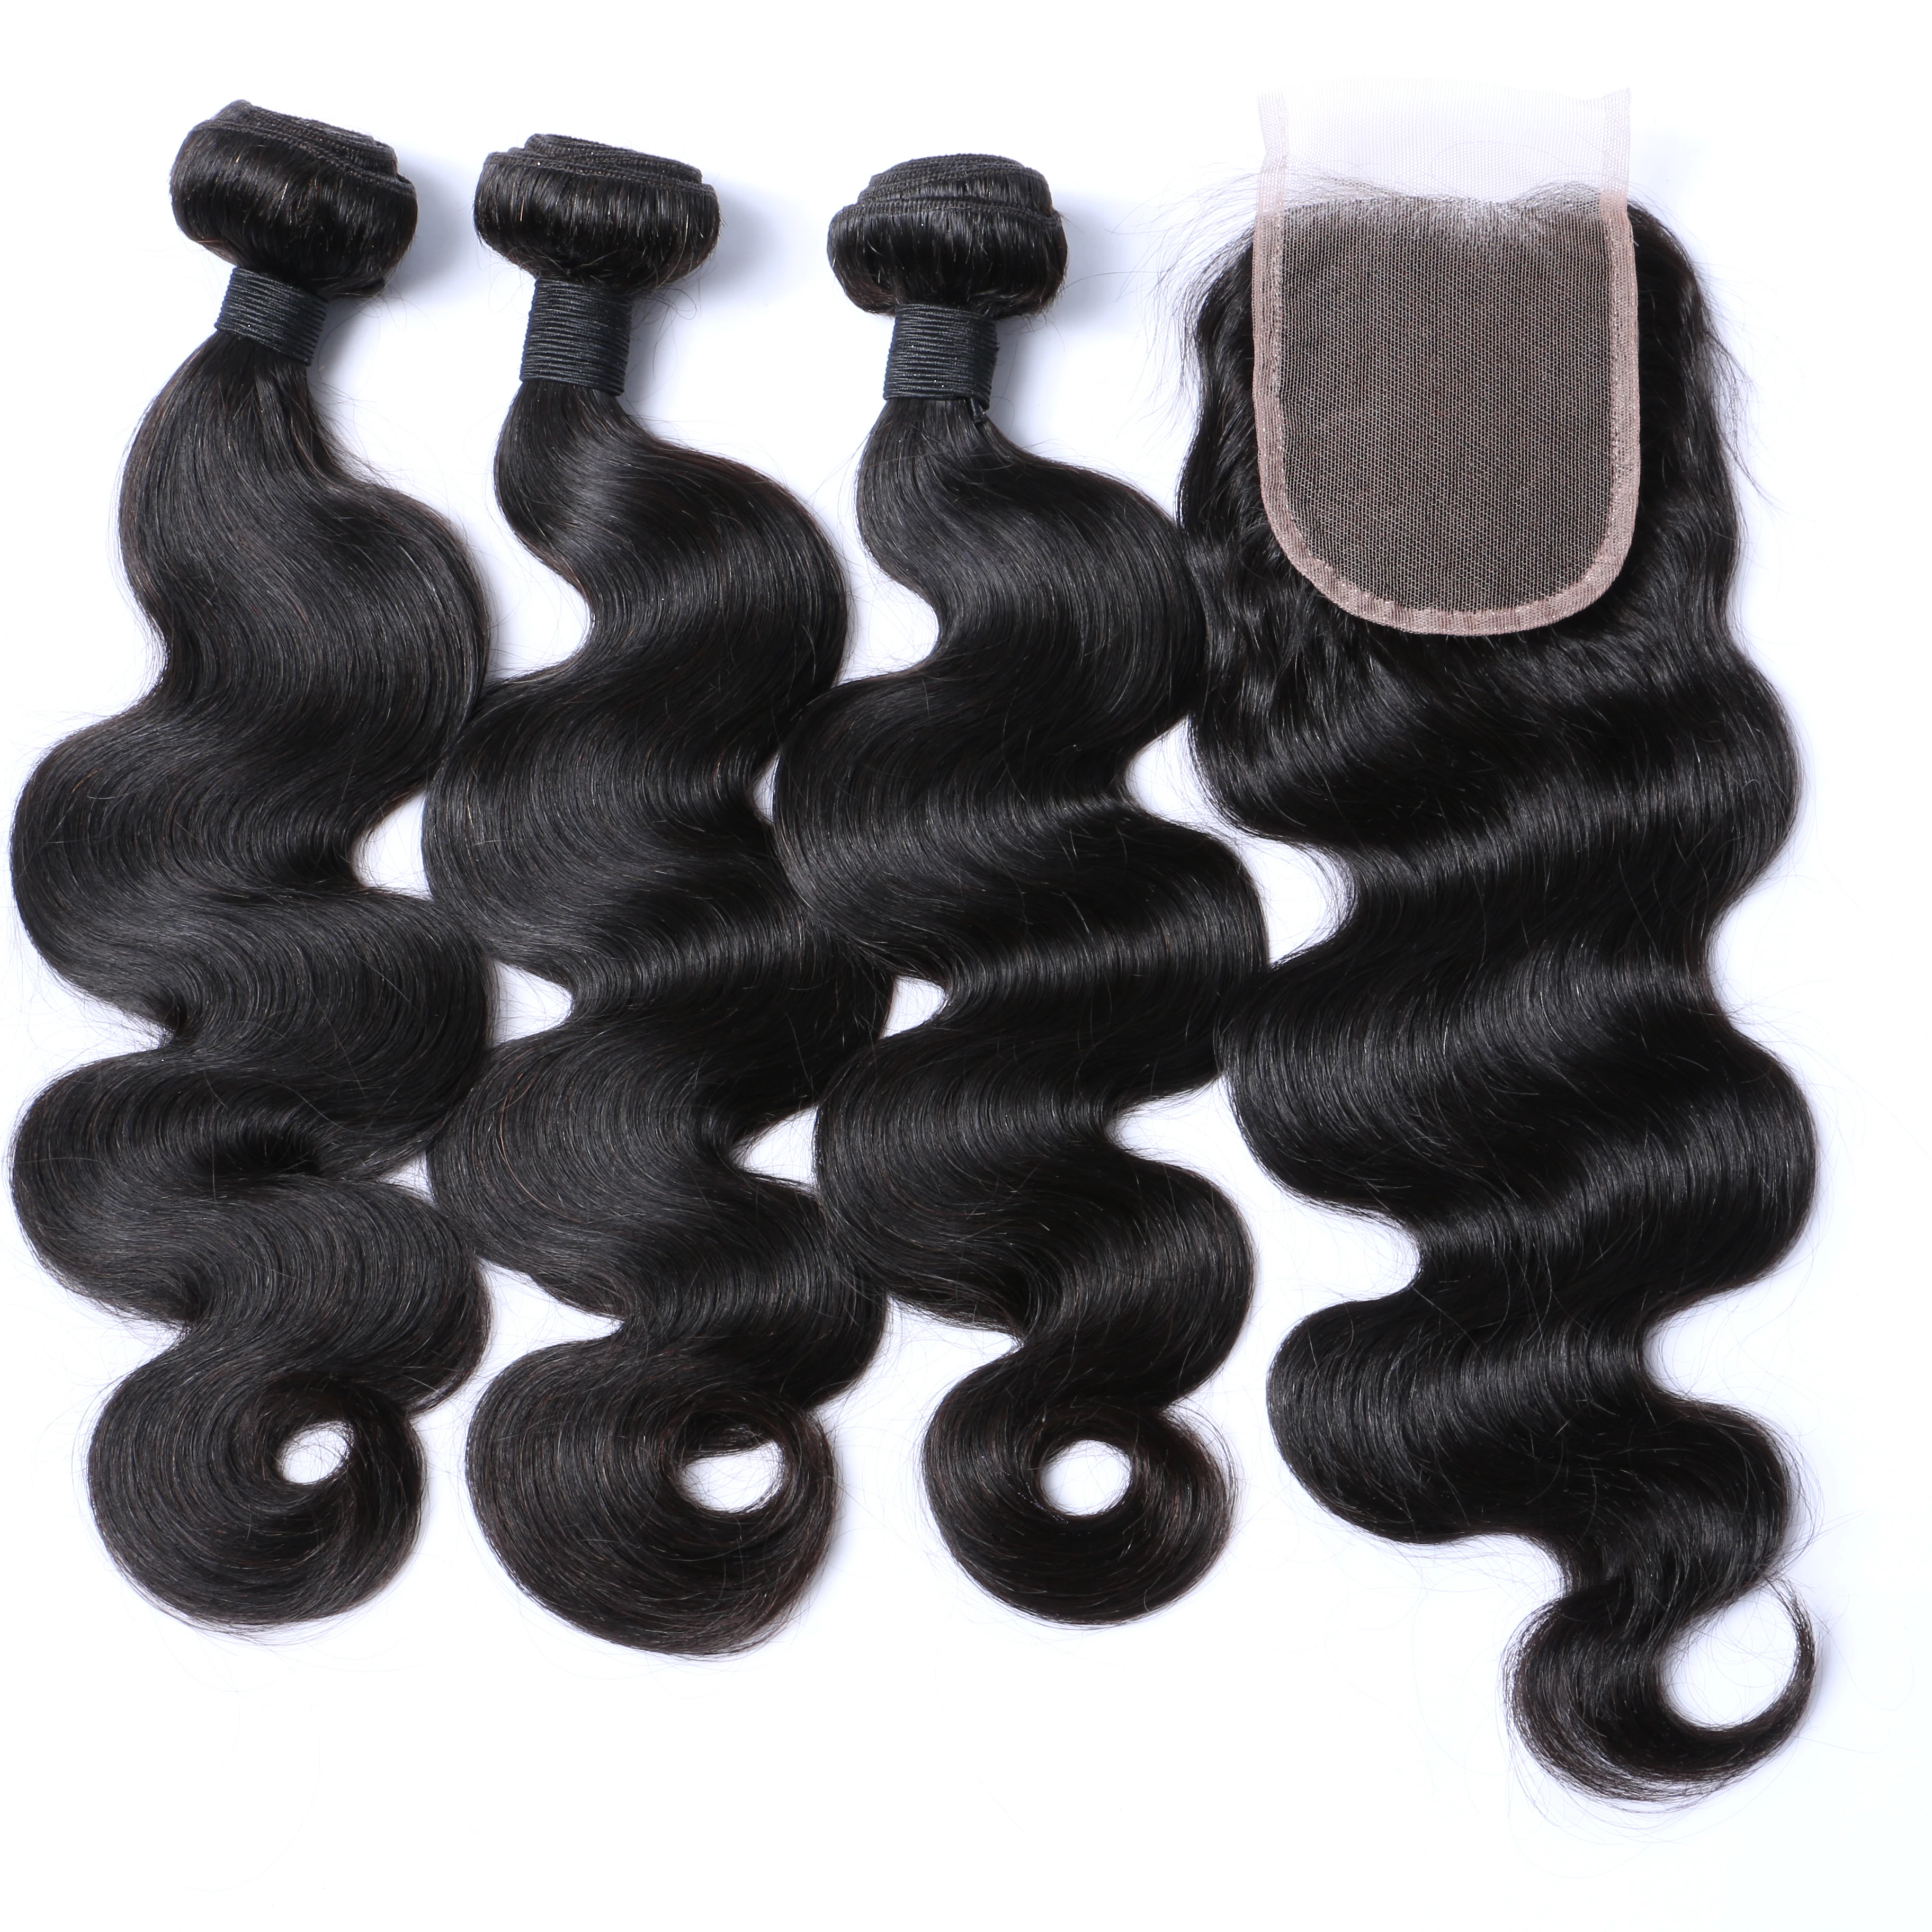 

Brazilian Human Hair 3 Bundles 12 14 16 inches With 10" 4x4 HD Lace Closure Body Wave 10A Bundles Deal Natural Black Color, Natutal black